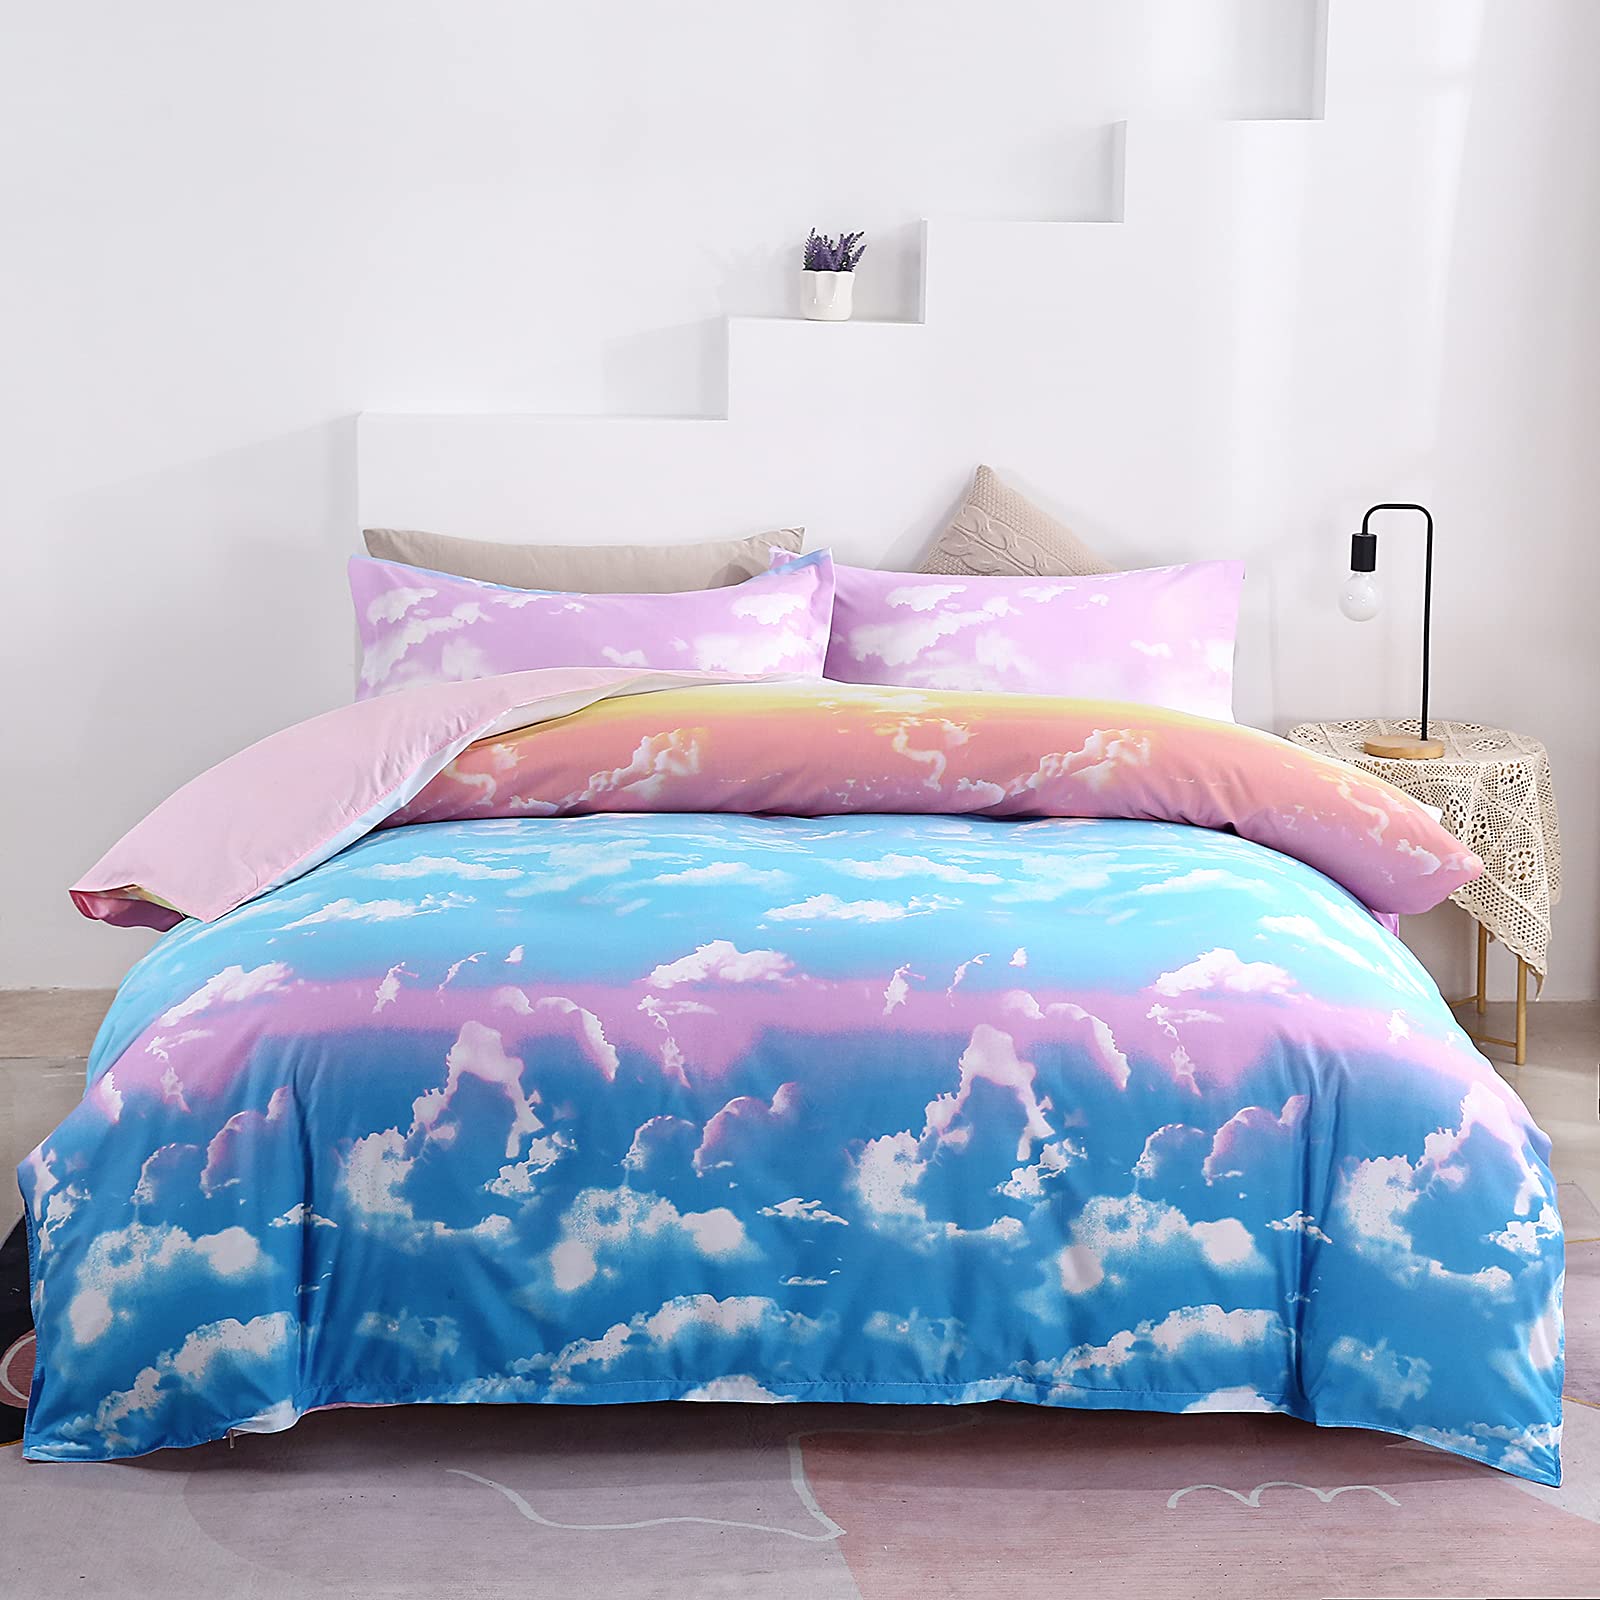 Book Cover Mengersi Rainbow Duvet Cover Set Twin Size for Girls Cloud Sky Pink Blue Comforter Cover Bedding Set with Zipper Closure (1 Duvet Cover +1 Pillow Sham)